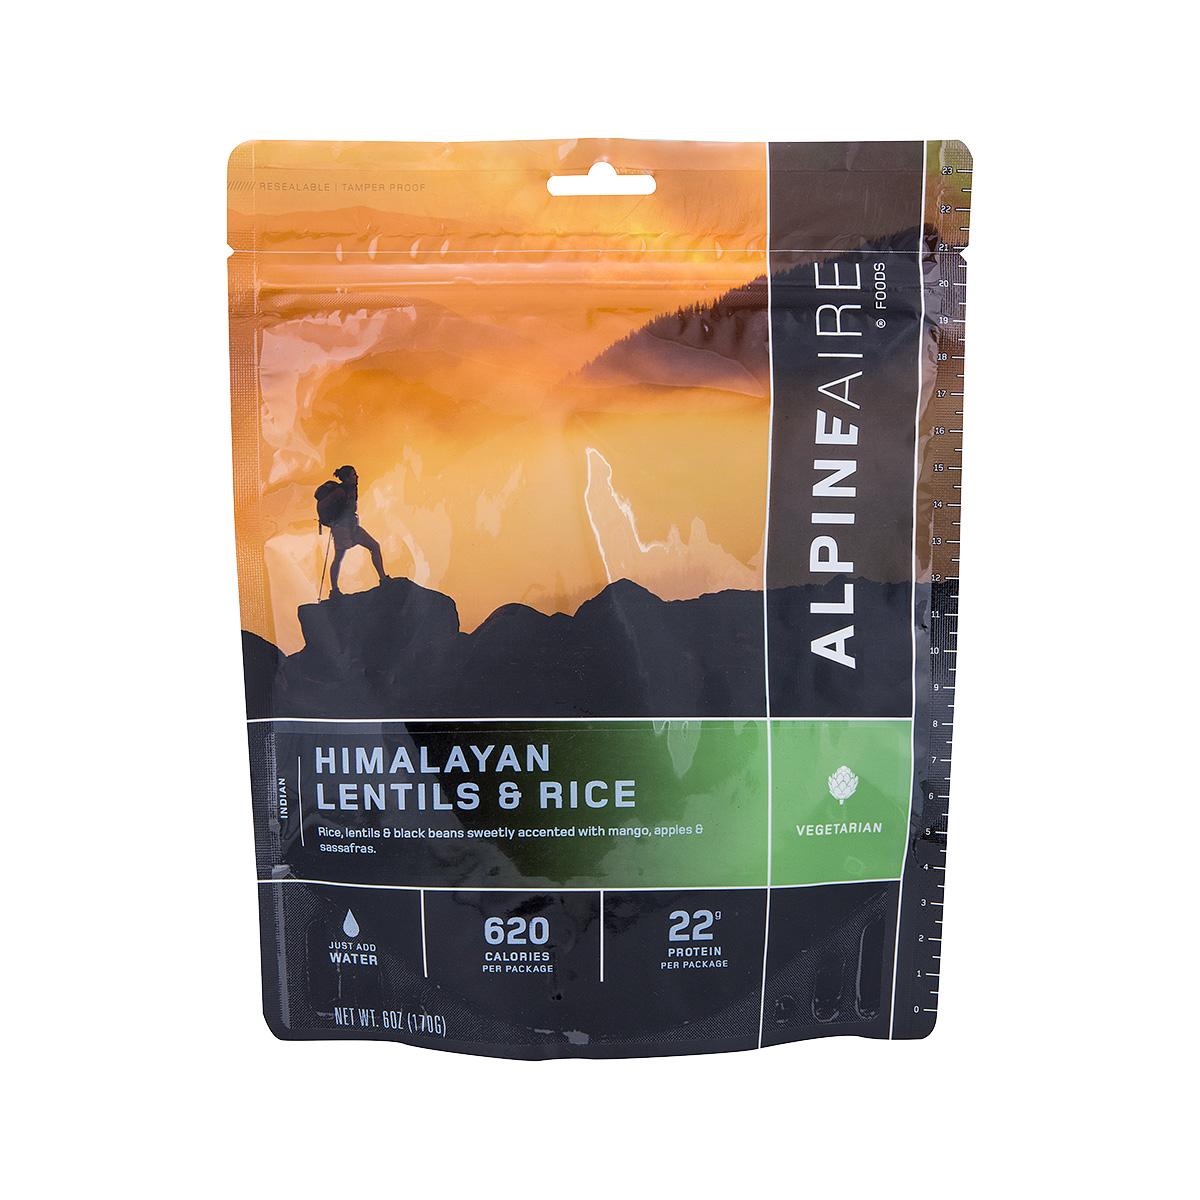  Himalayan Lentils & Rice Instant Meal